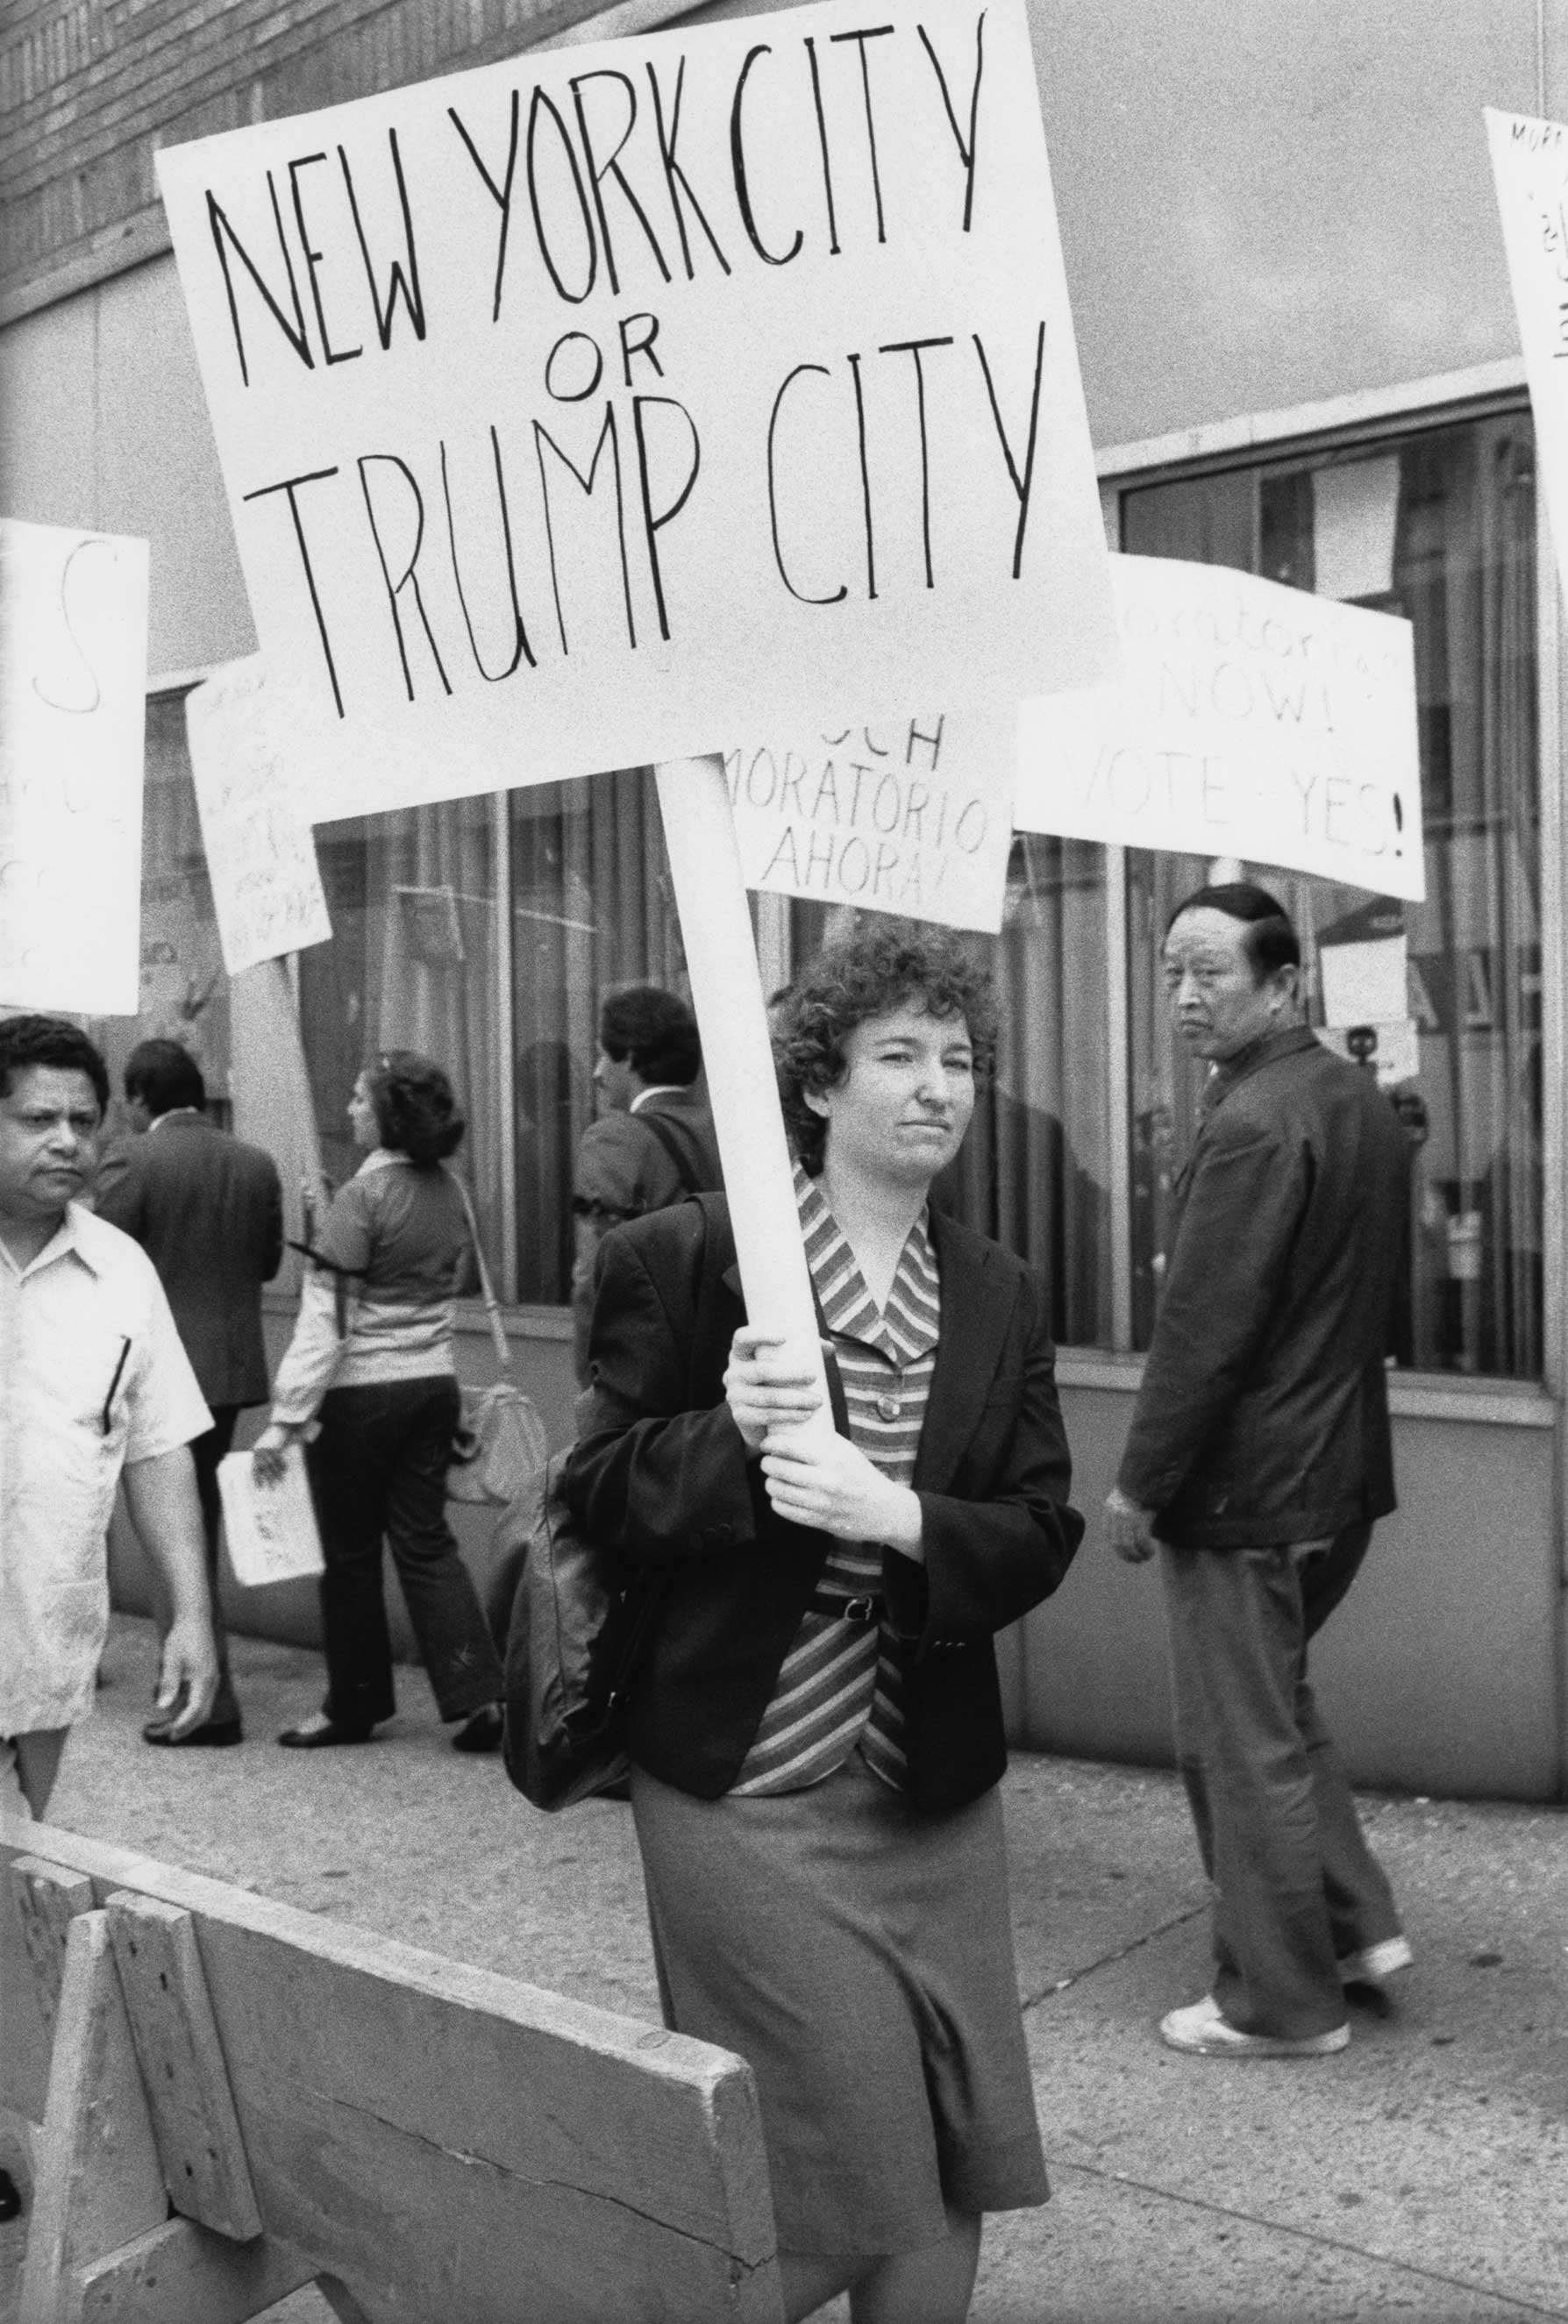 03-photo-london-Jill-Freedman-New-York-or-Trump-City,-1983